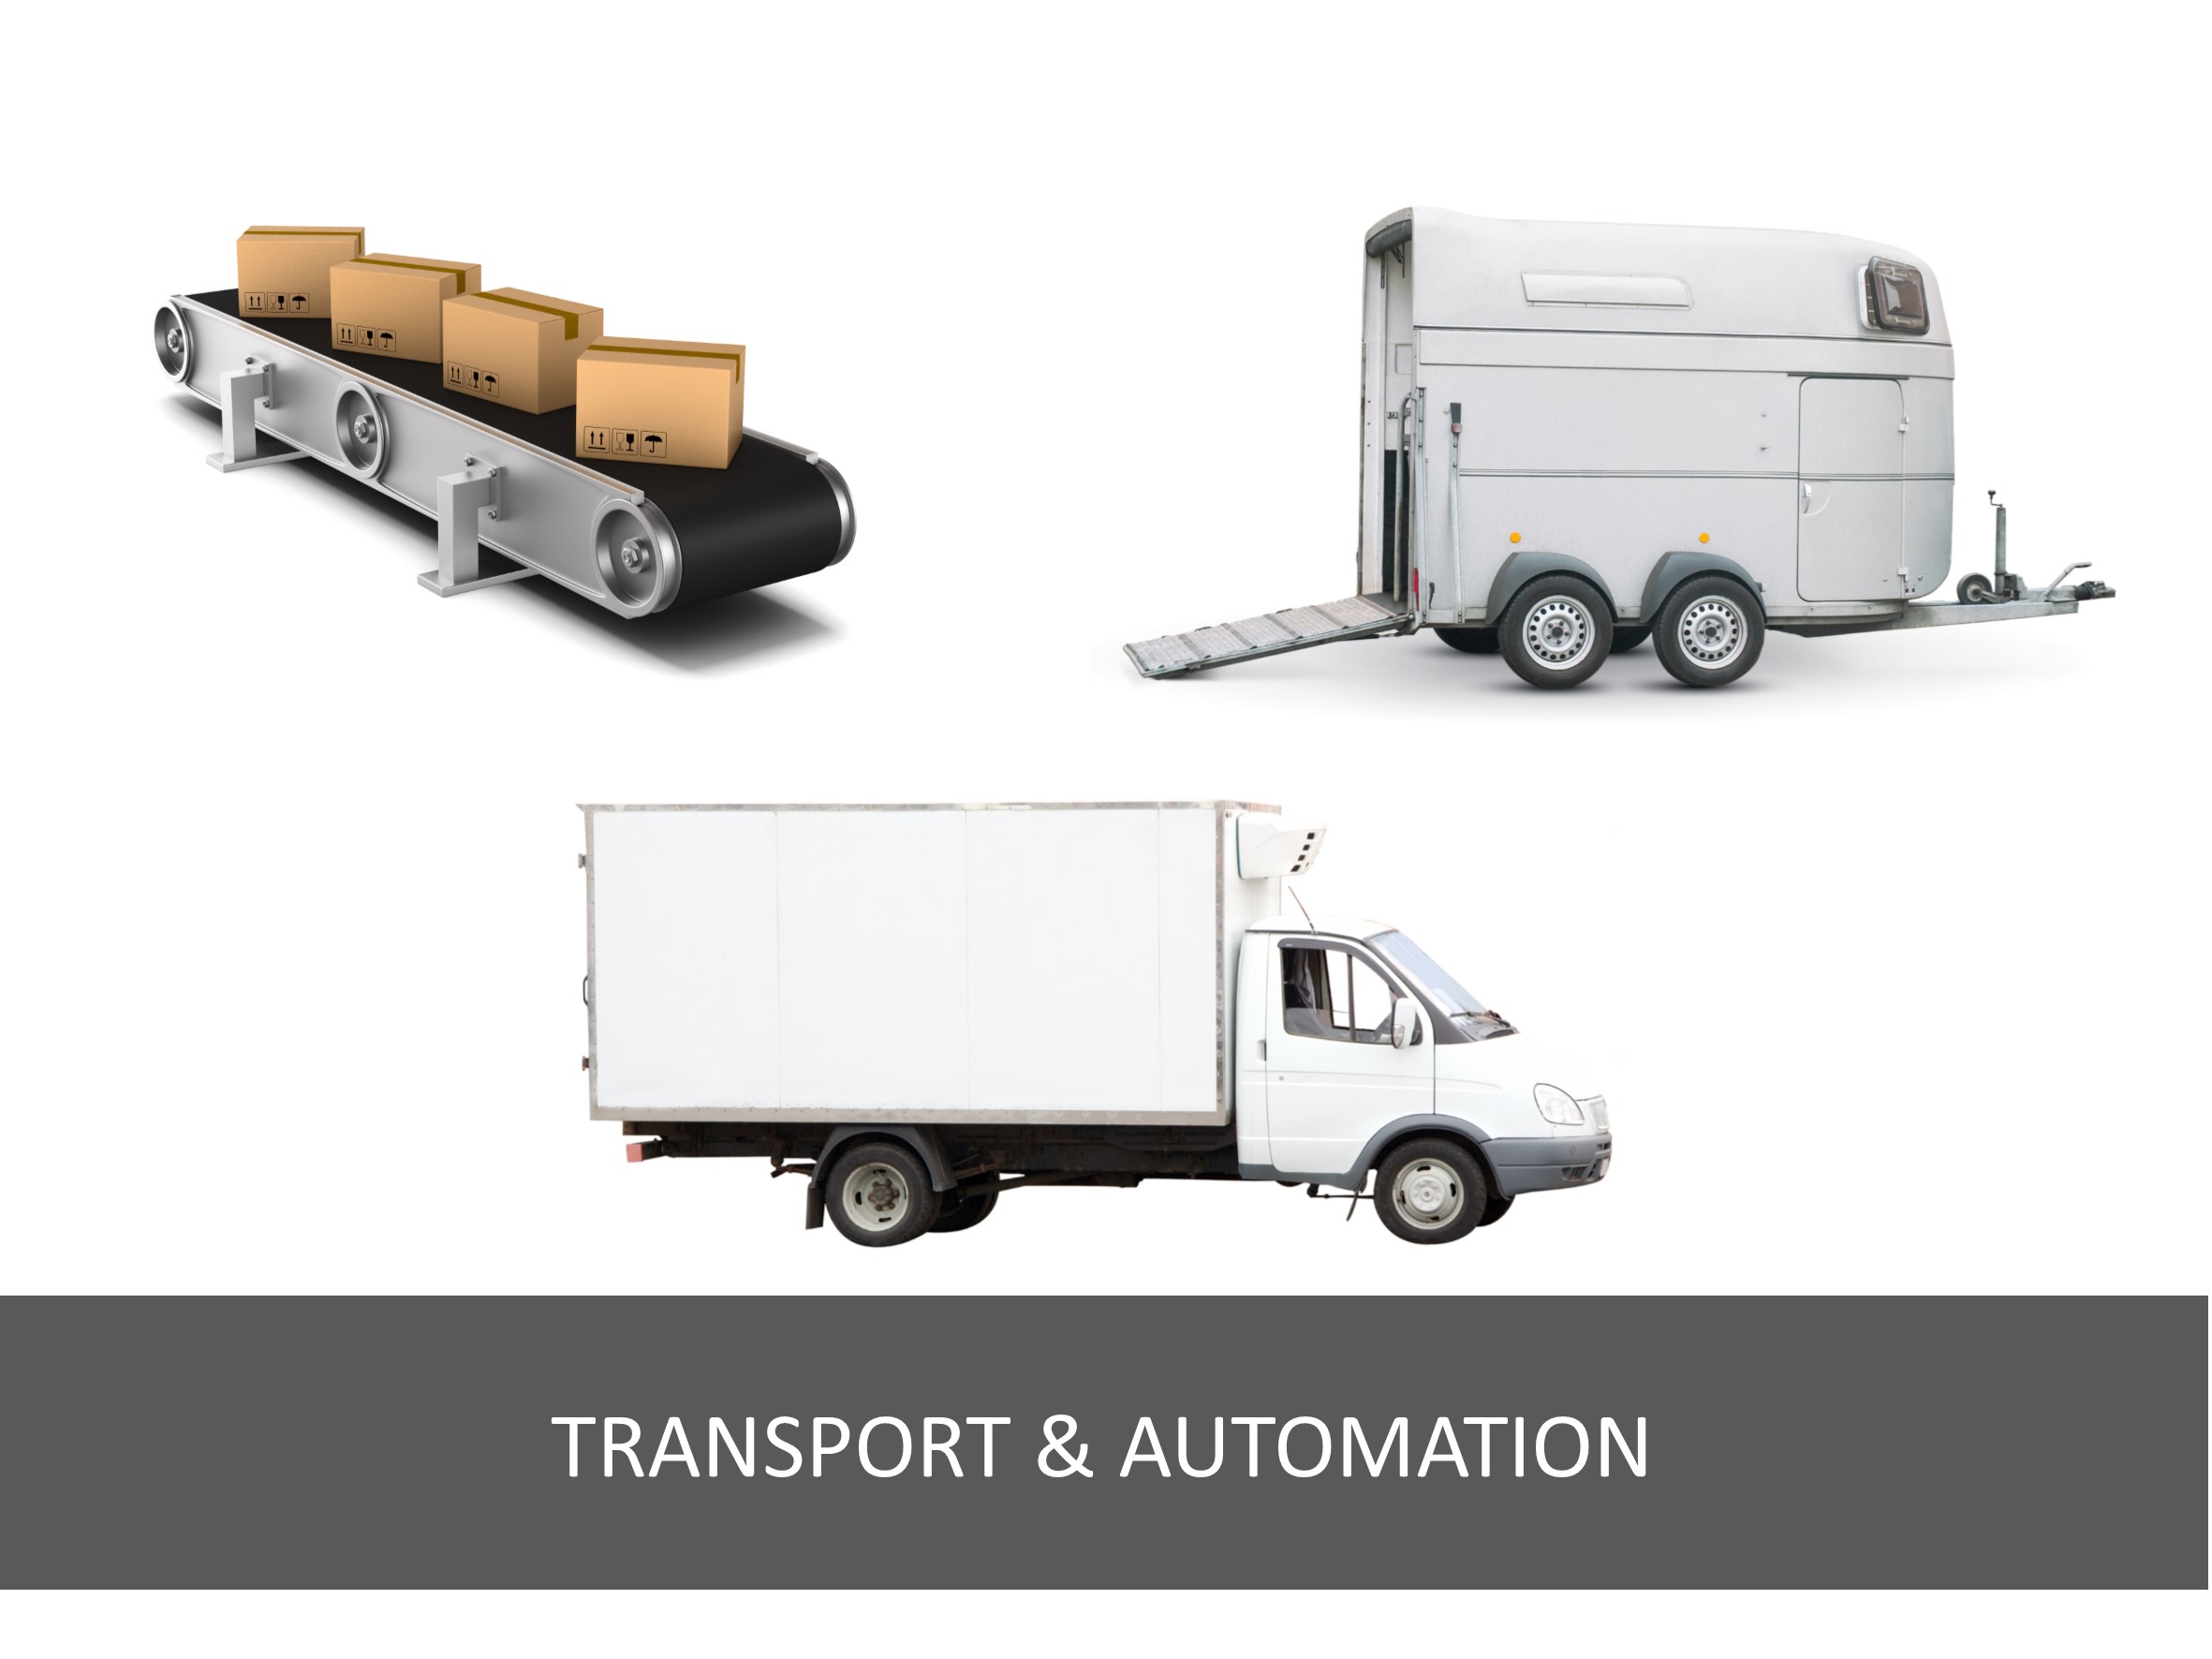 Transport & automation